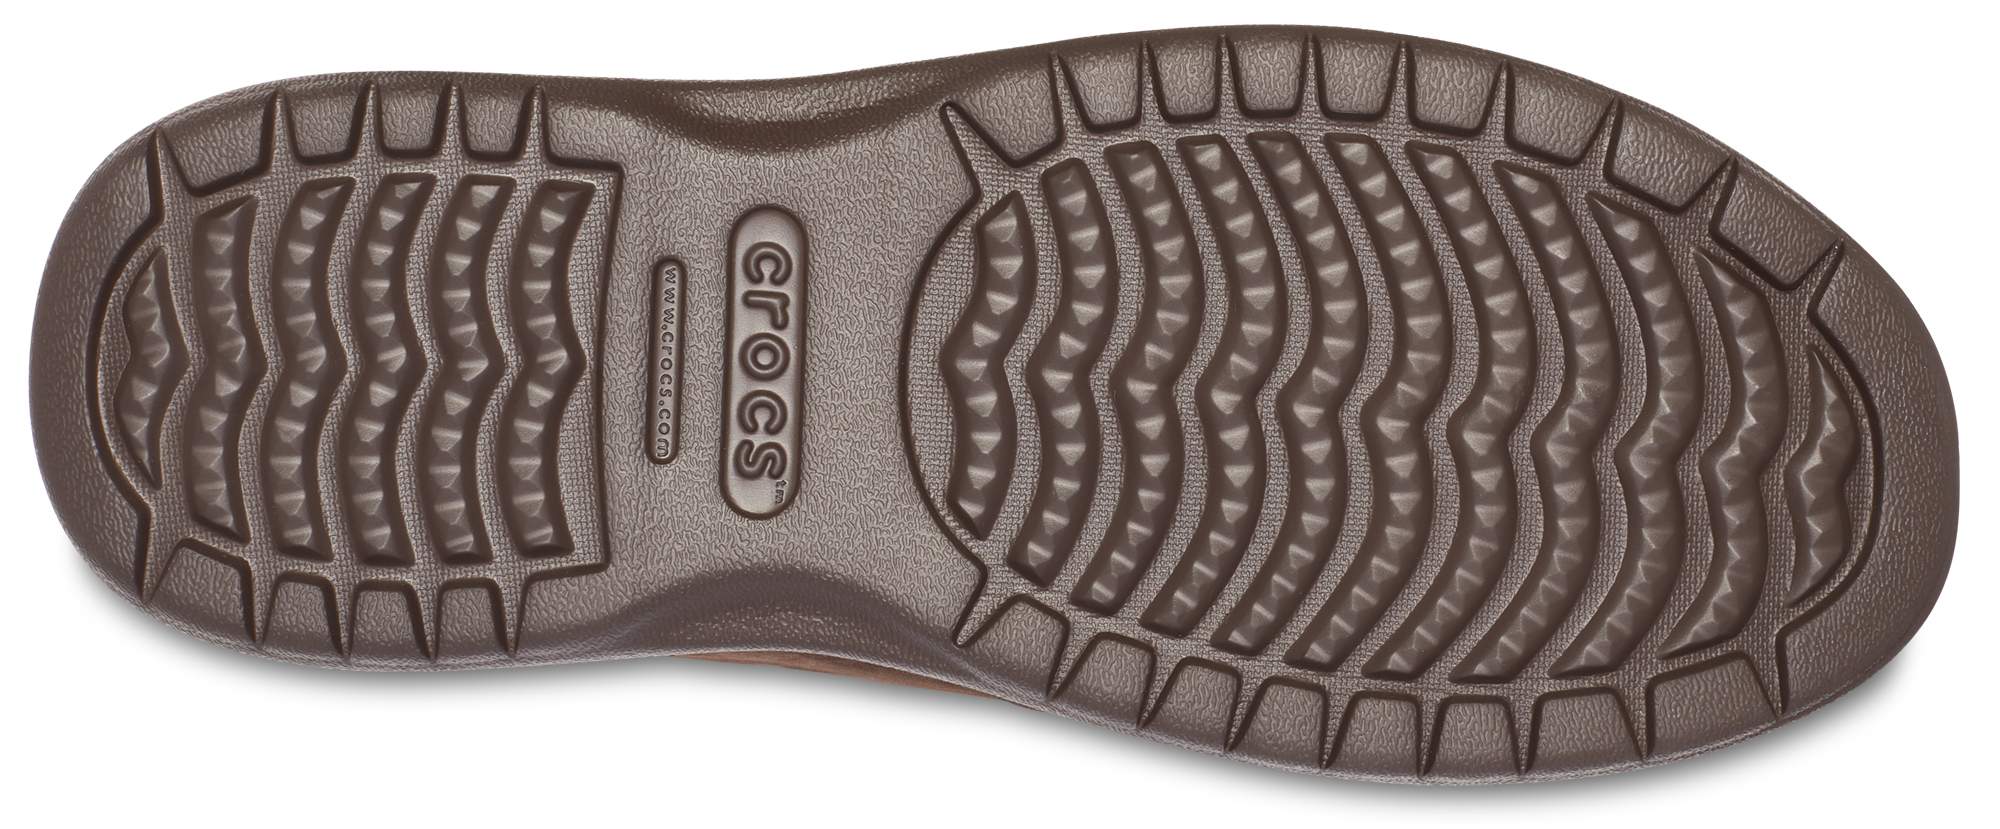 crocs santa cruz leather flip flops